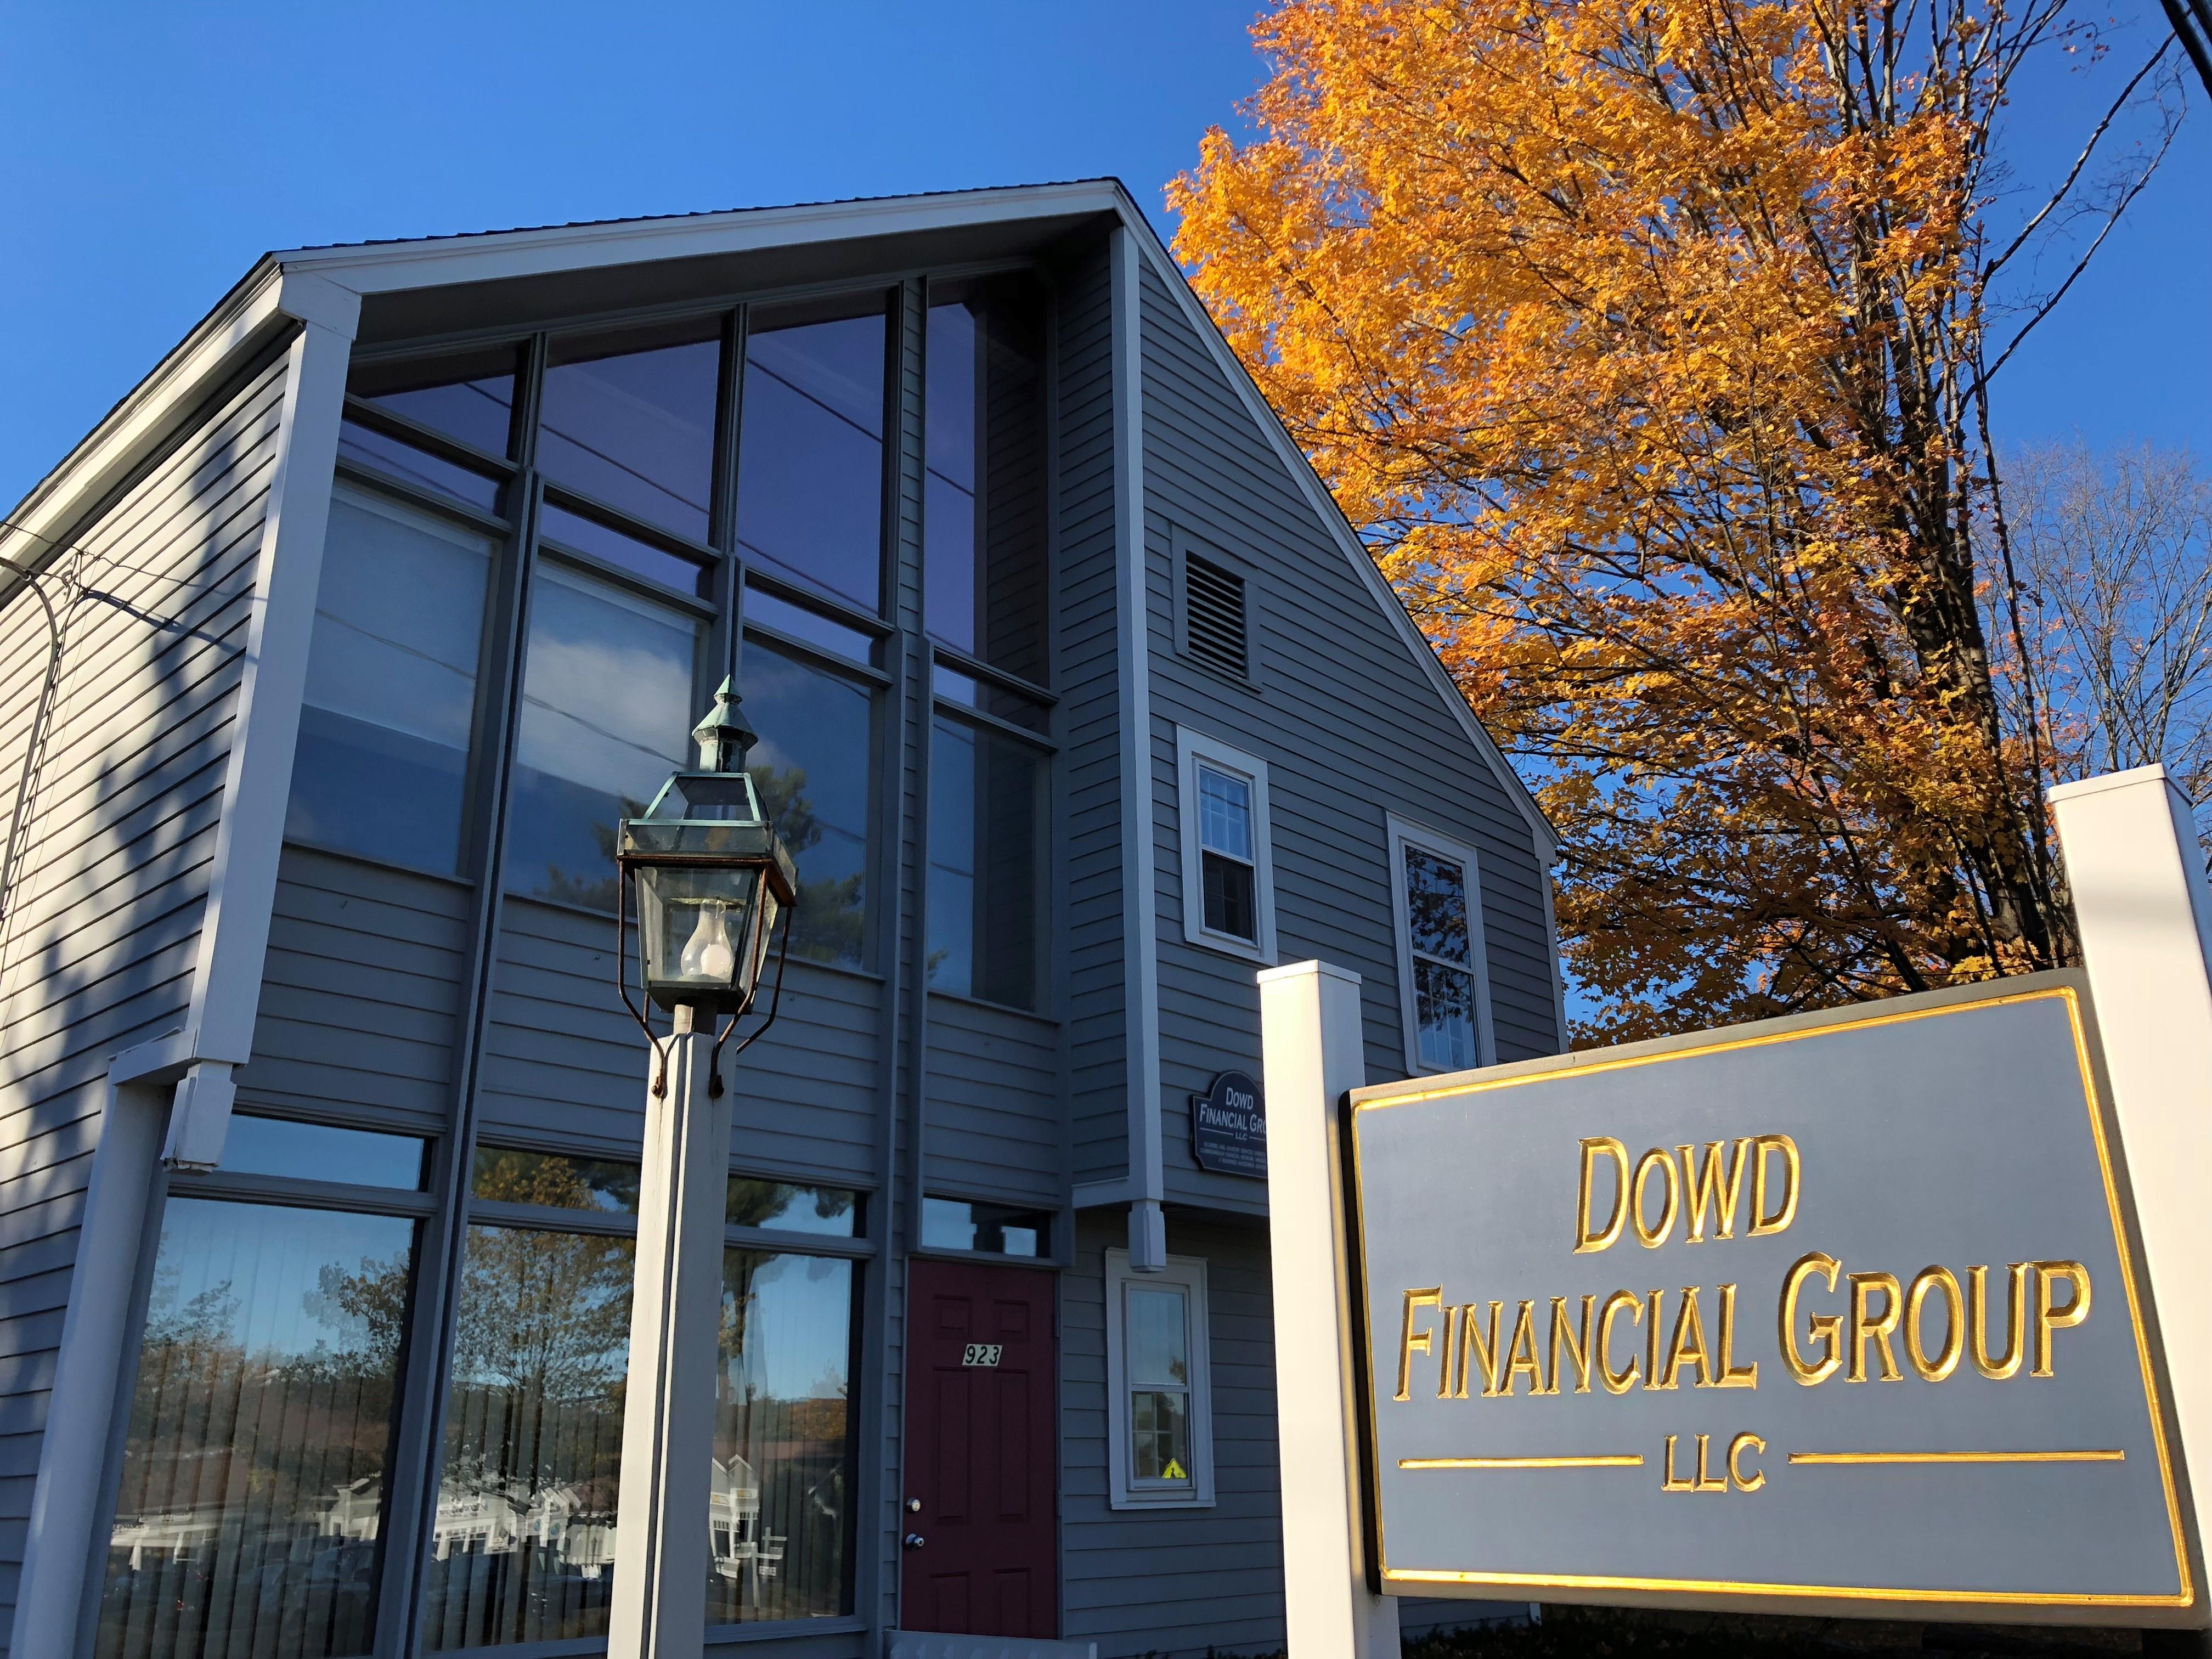 Dowd Financial Group LLC Simsbury CT office